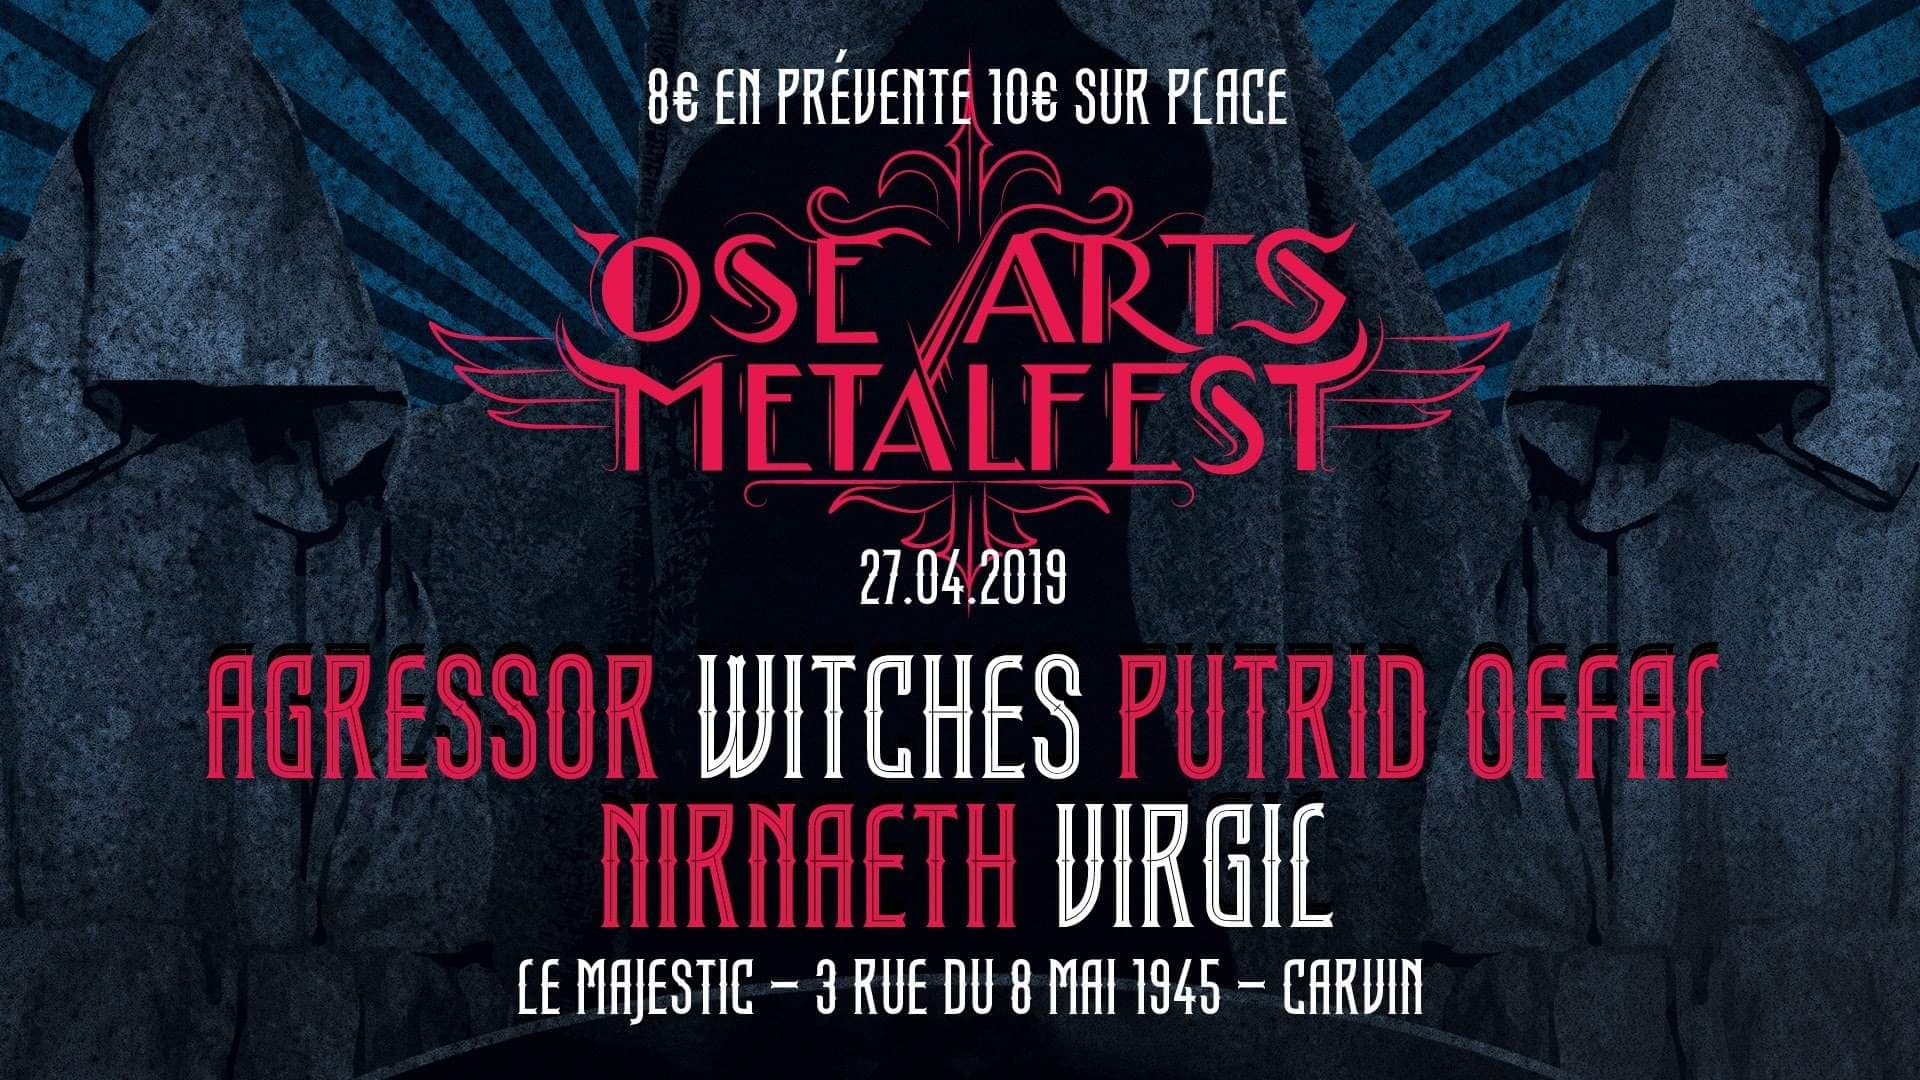 Witches flyer Agressor + Witches + Putrid Offal + Nirnaeth + Virgil @ Ose Arts Metal Fest Le Majestic Carvin (62), France